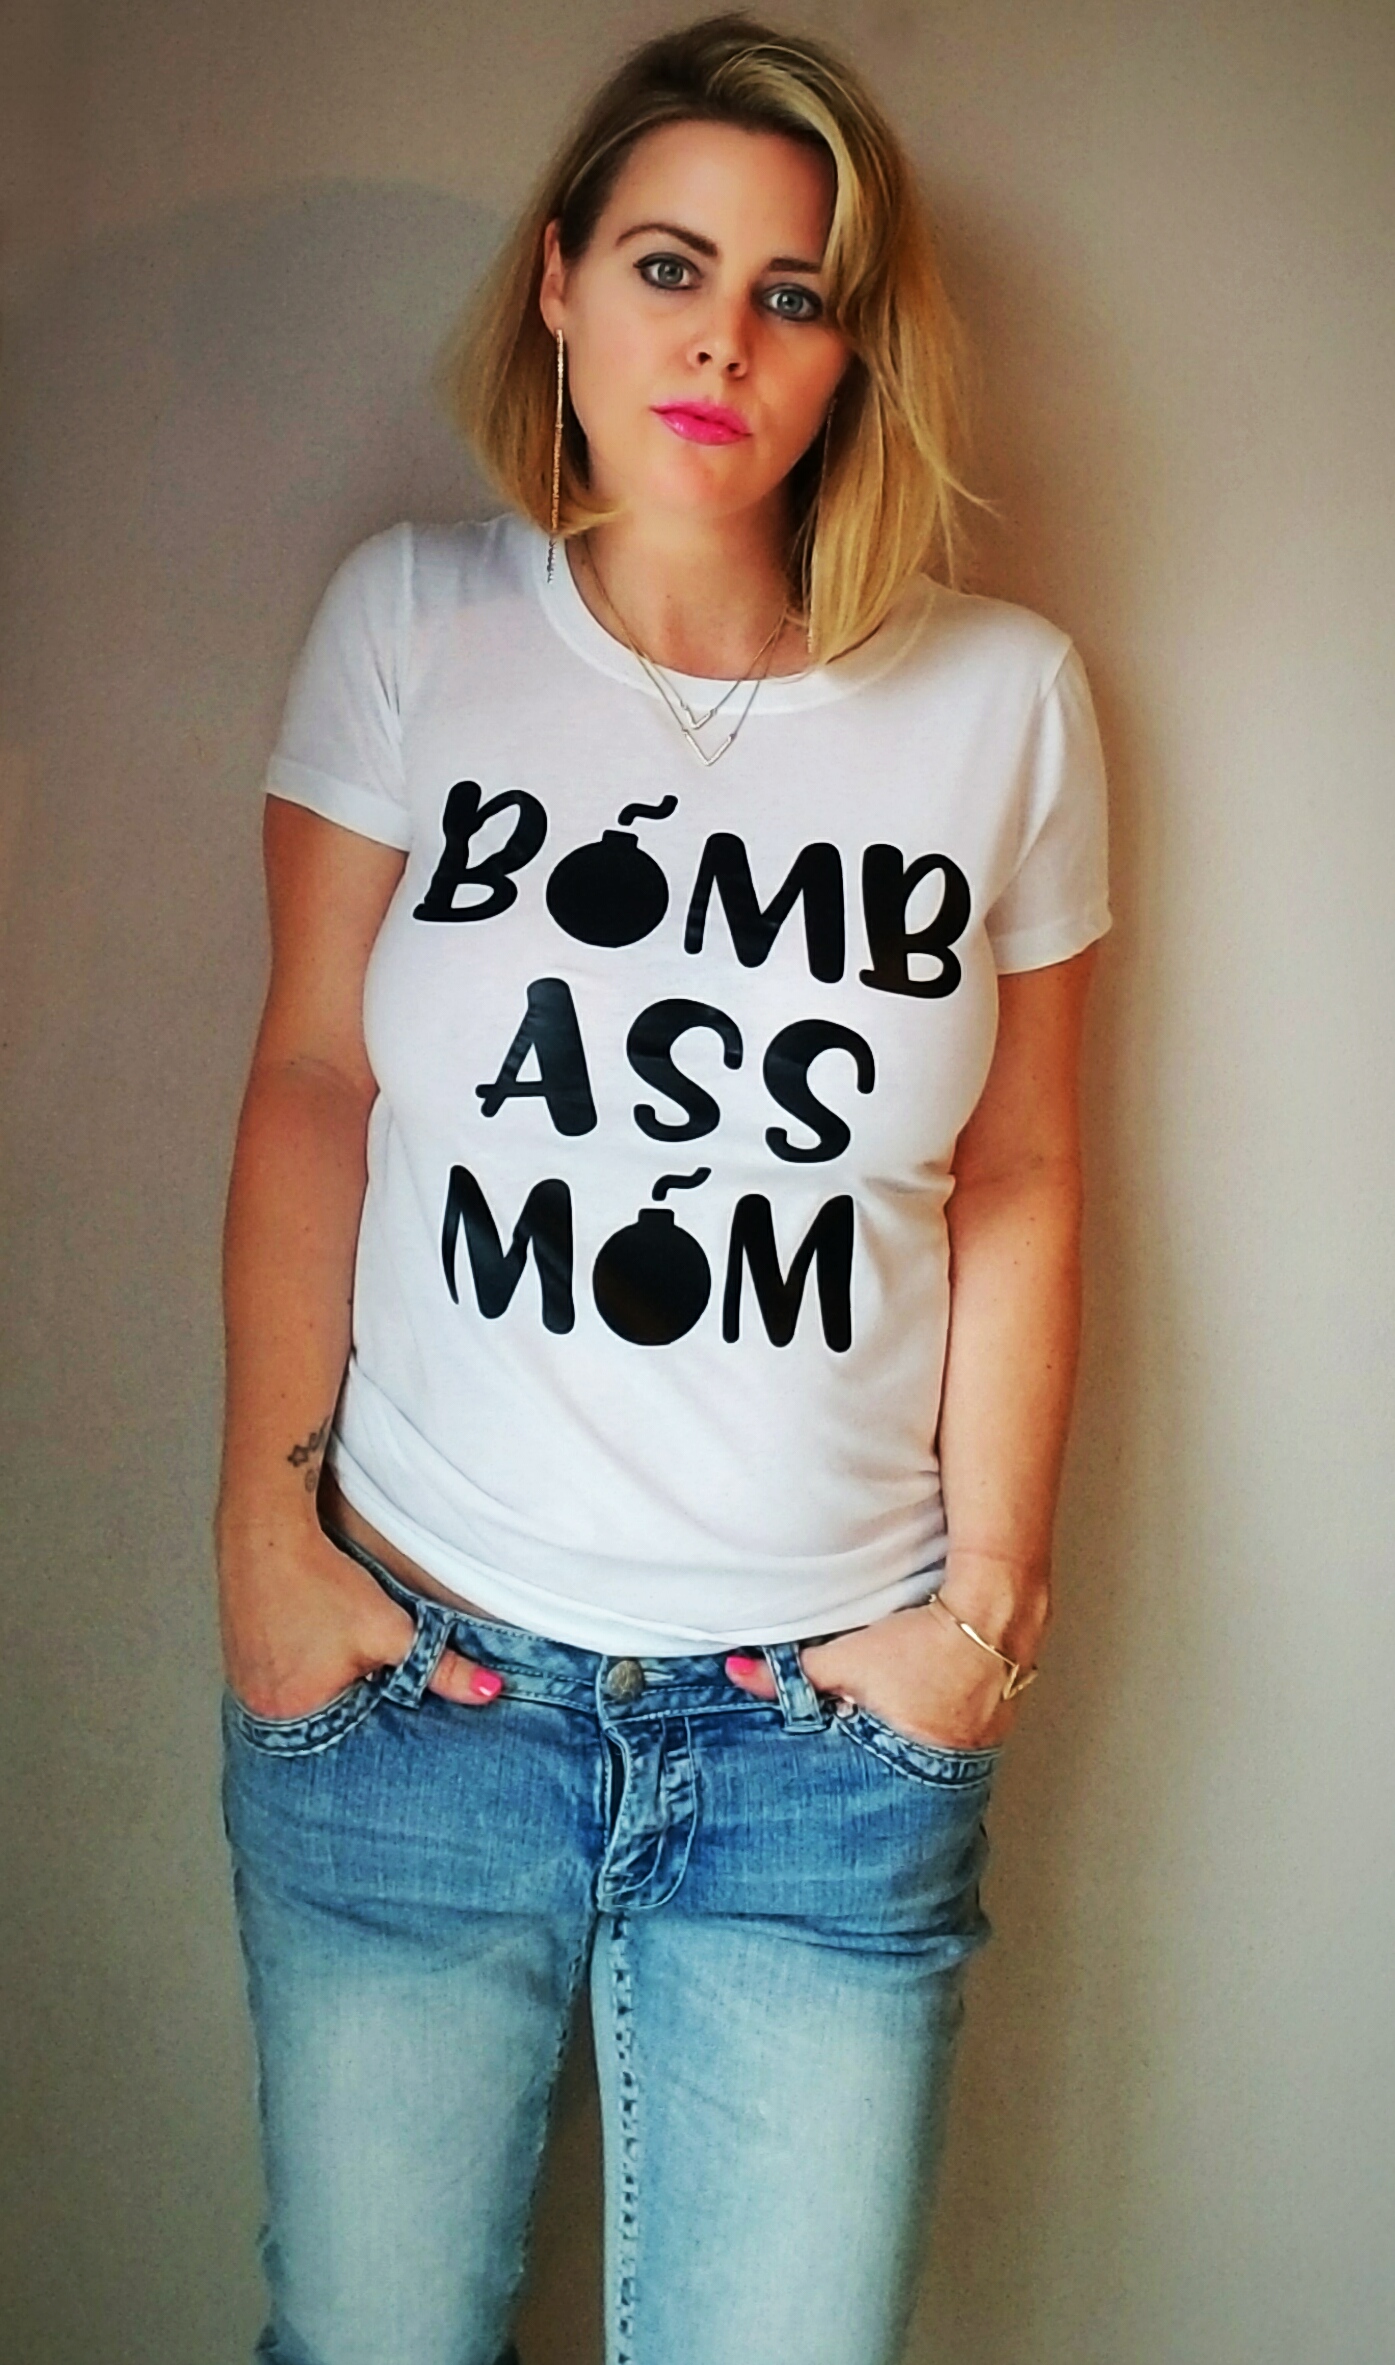 Bomb Ass Mom Funny Mom Shirt - Women's Tees T-Shirts